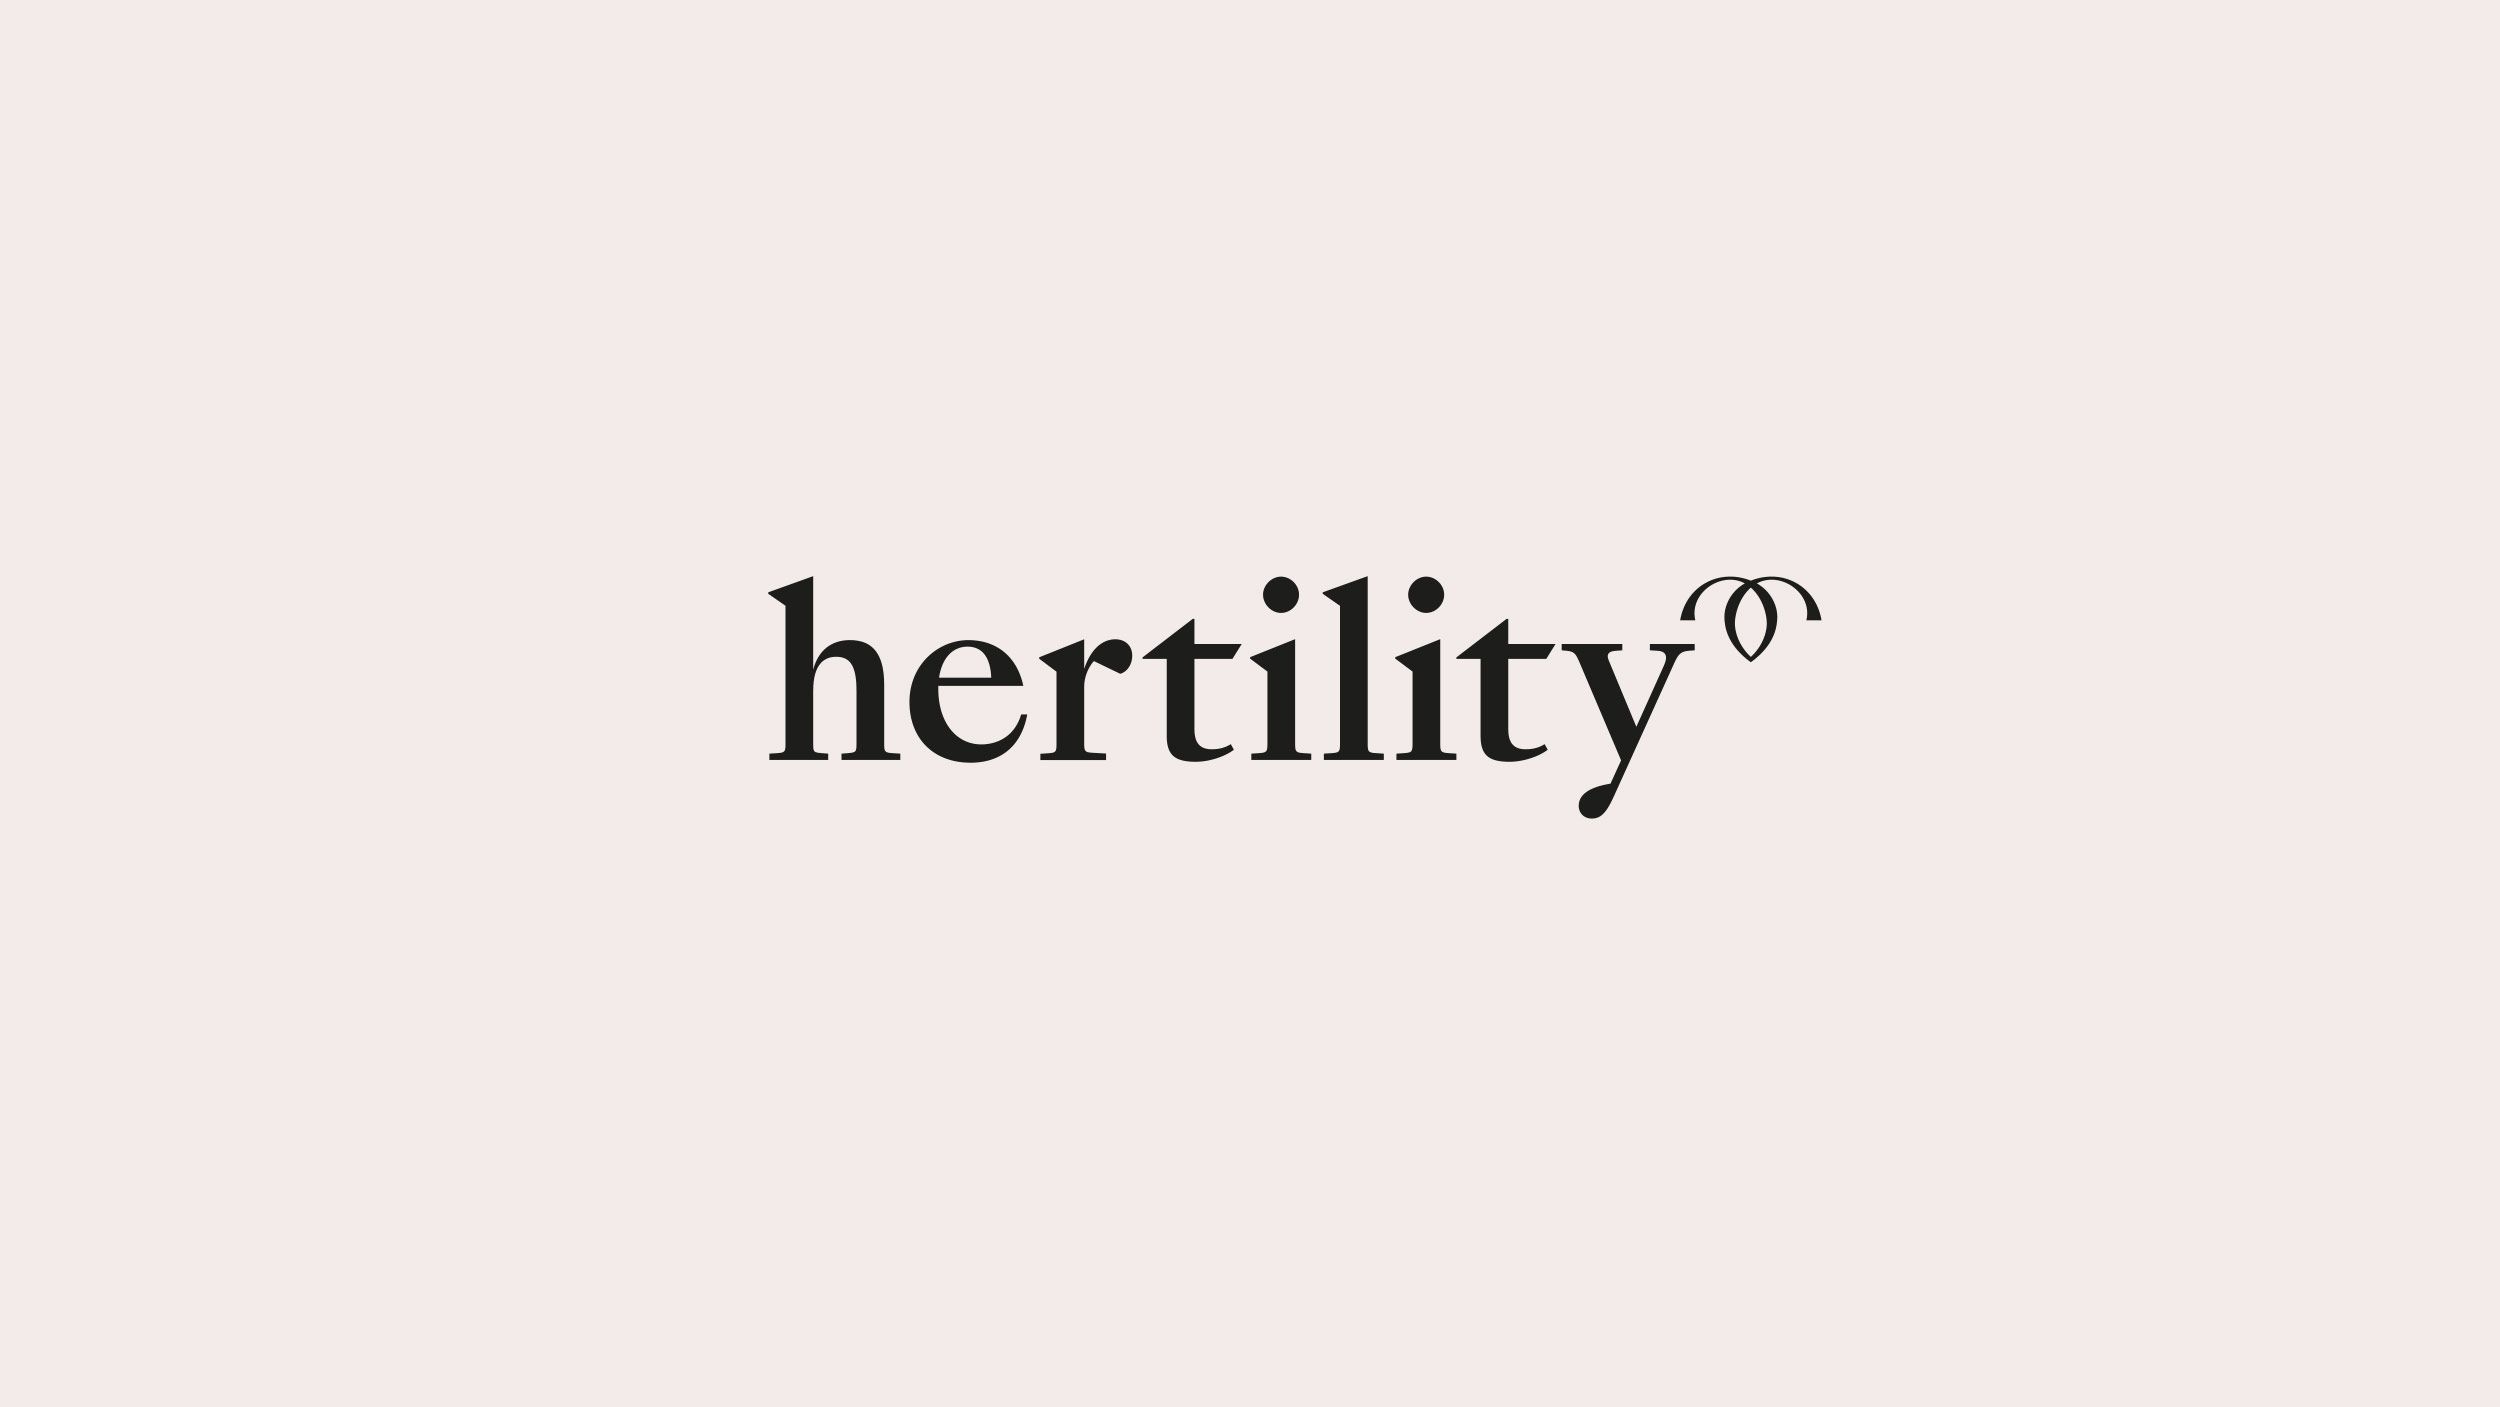 Hertility